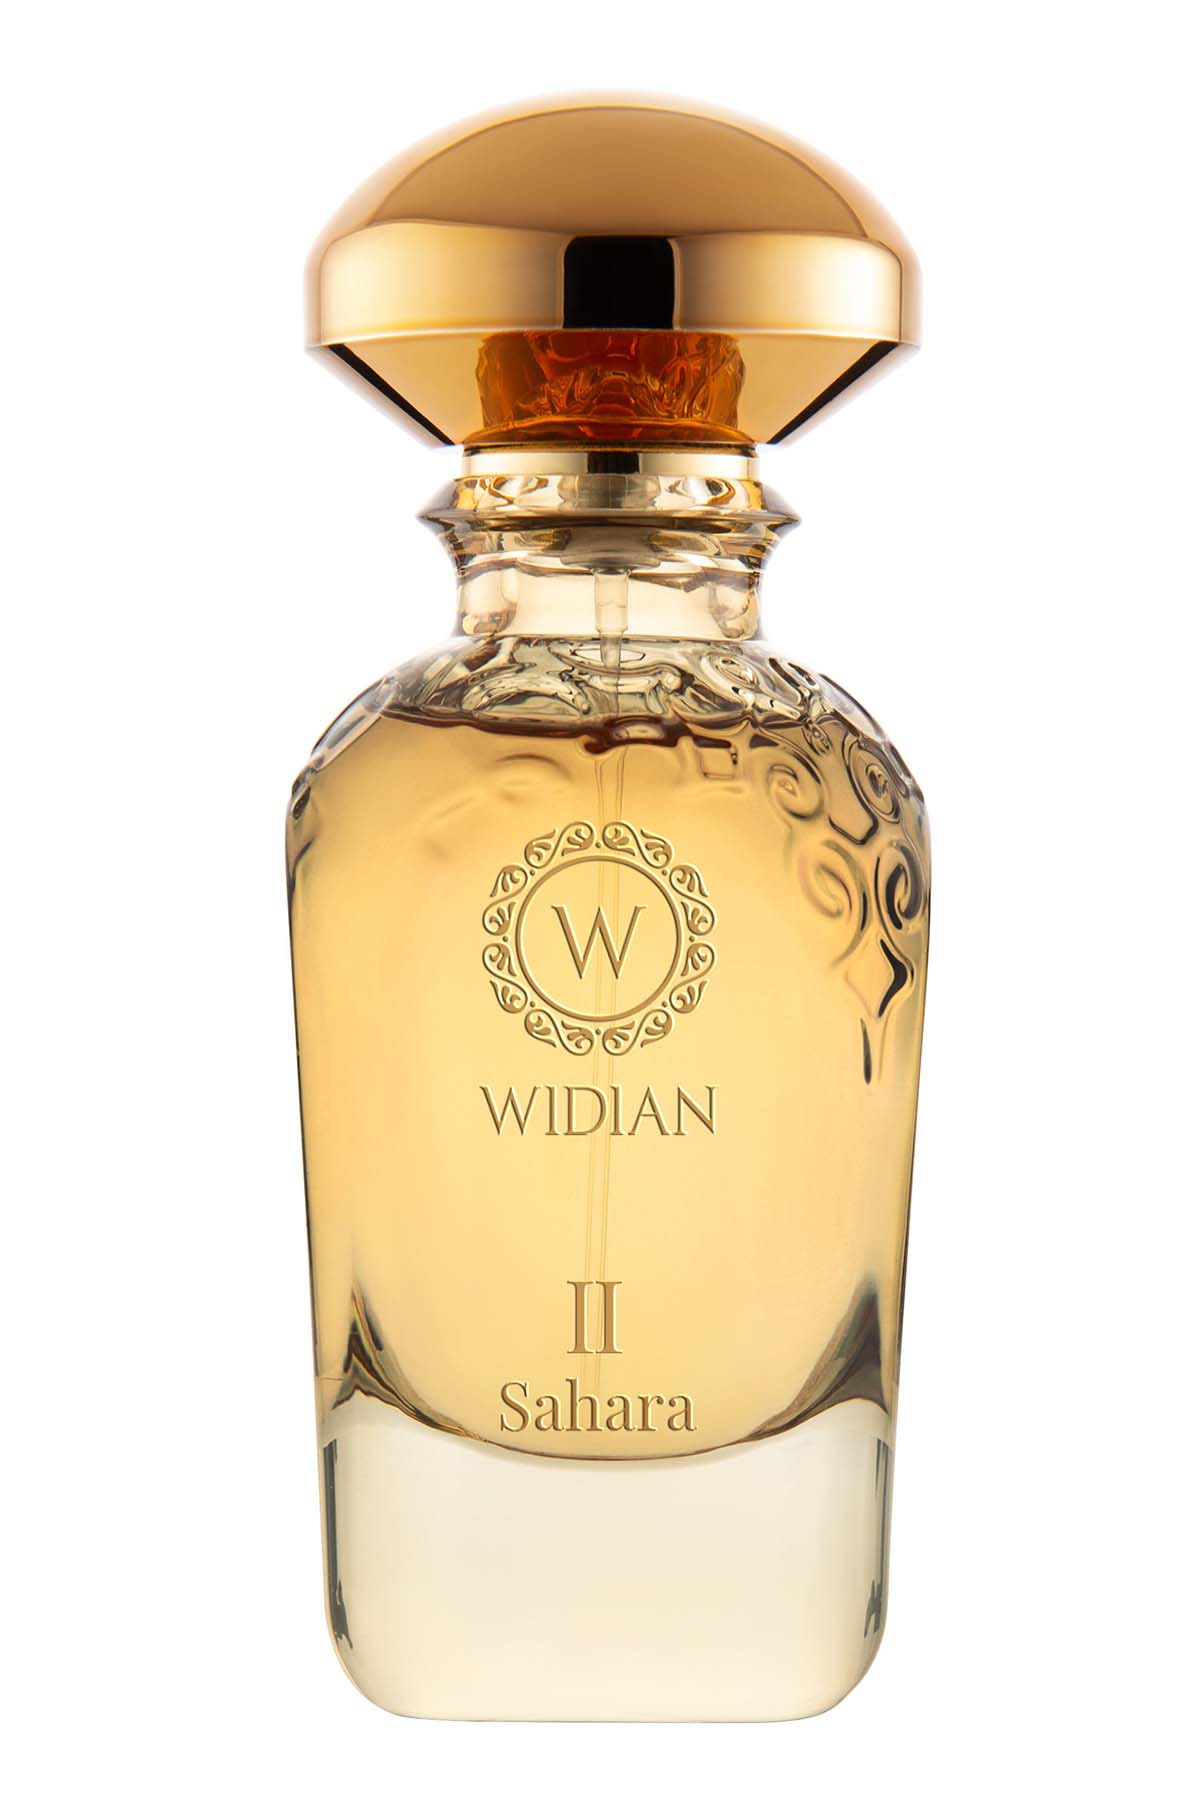 Widian Gold II Sahara Extrait de Parfum